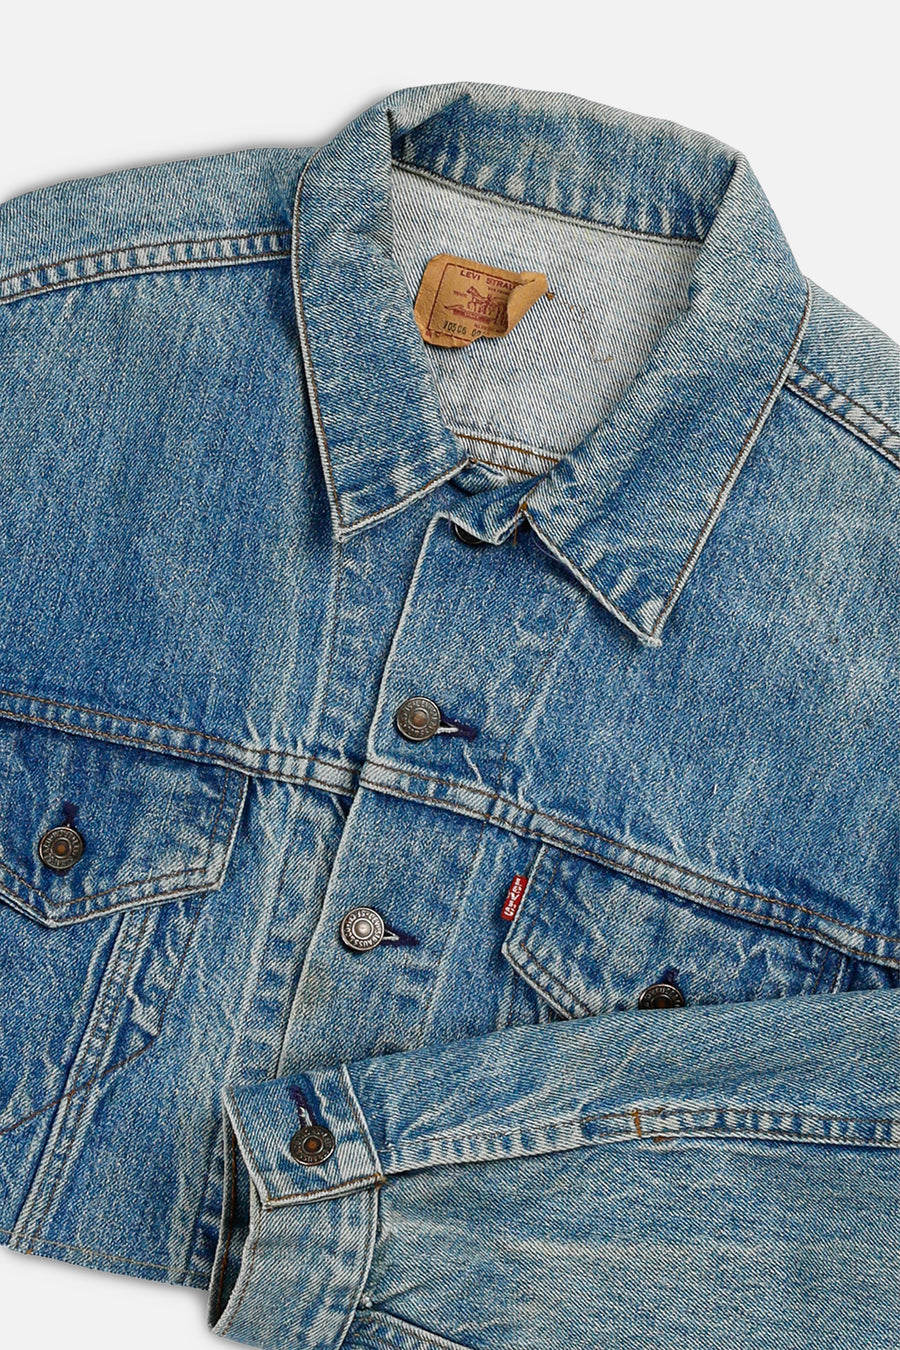 Rework Vintage Levi's USA Crop Denim Jacket - L